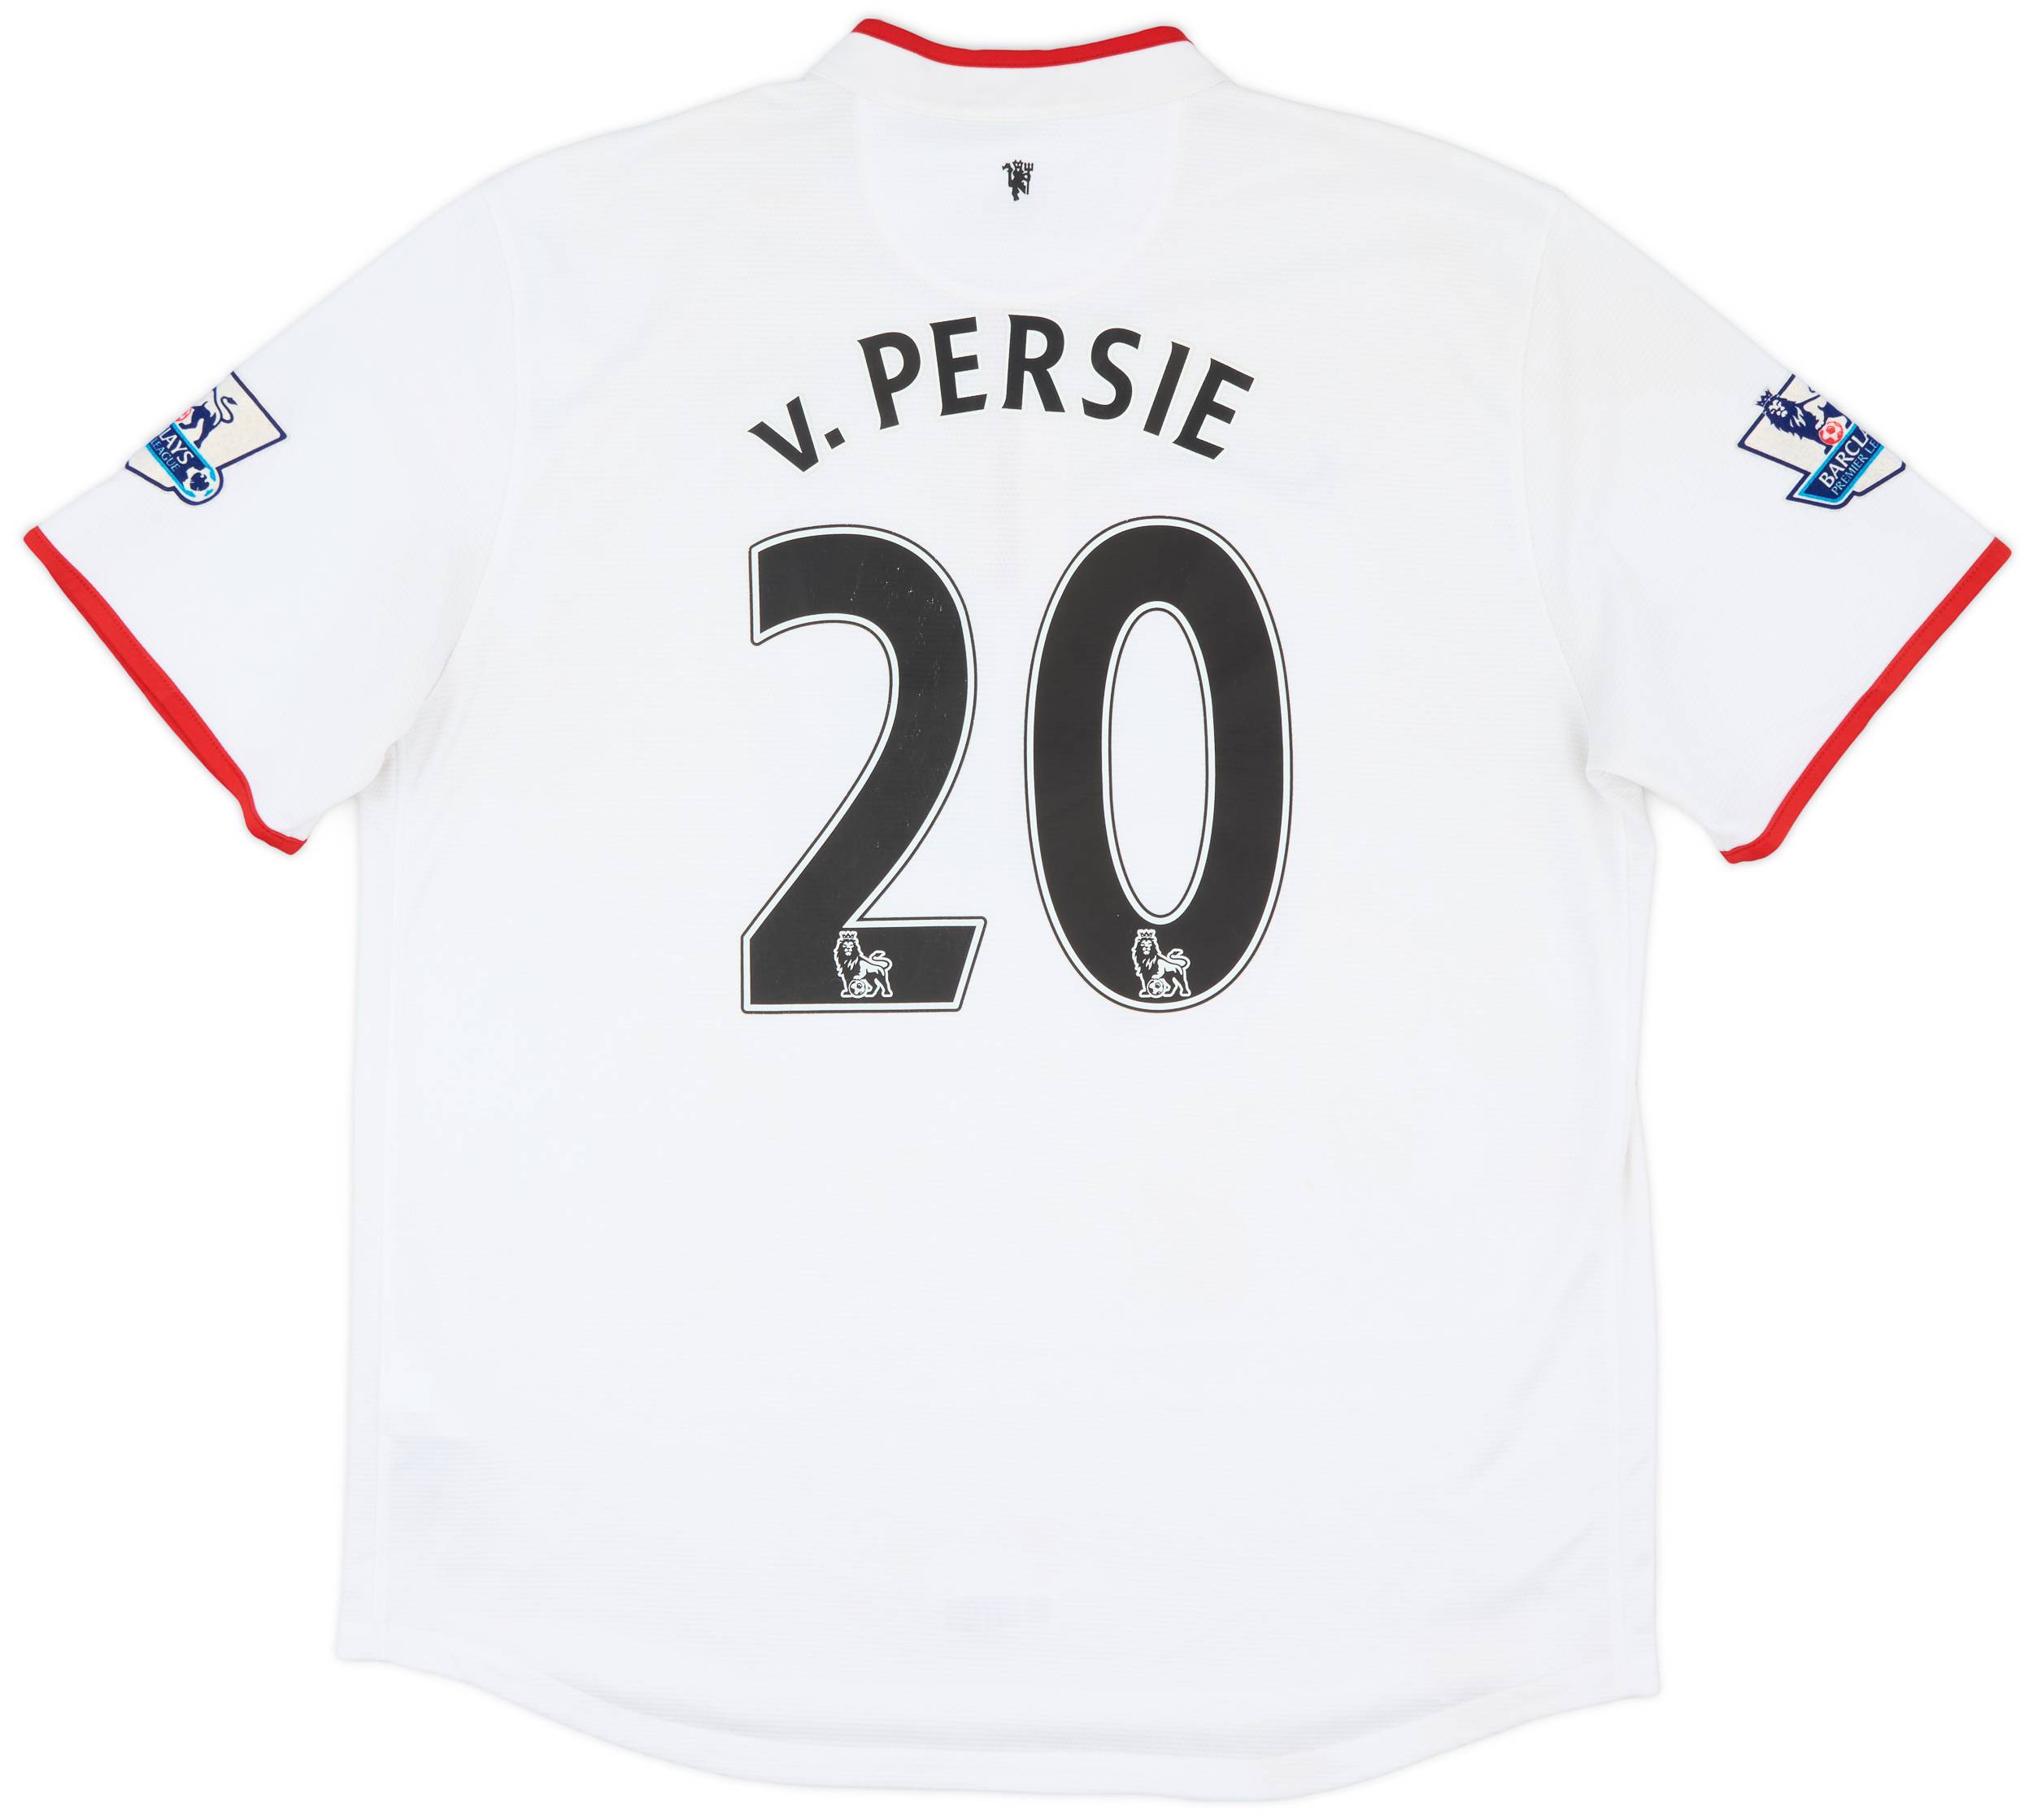 2012-14 Manchester United Away Shirt v.Persie #20 - 6/10 - (XL)